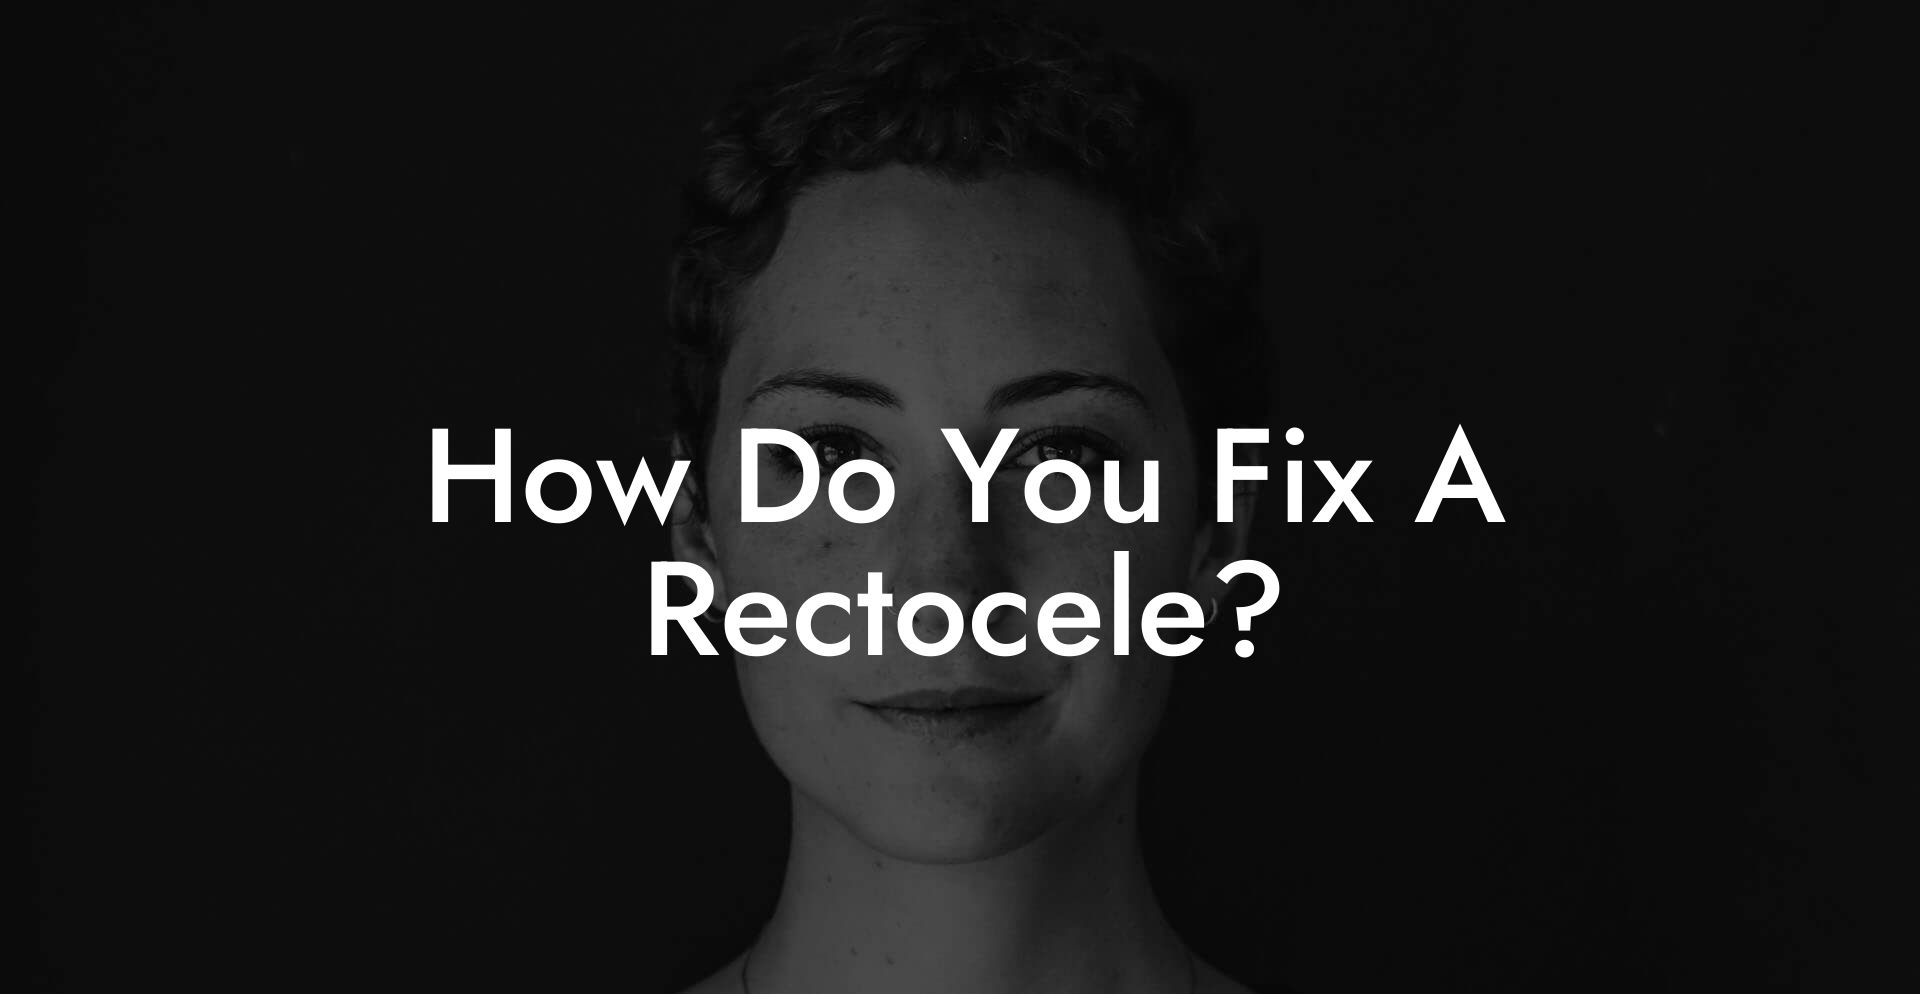 How Do You Fix A Rectocele?